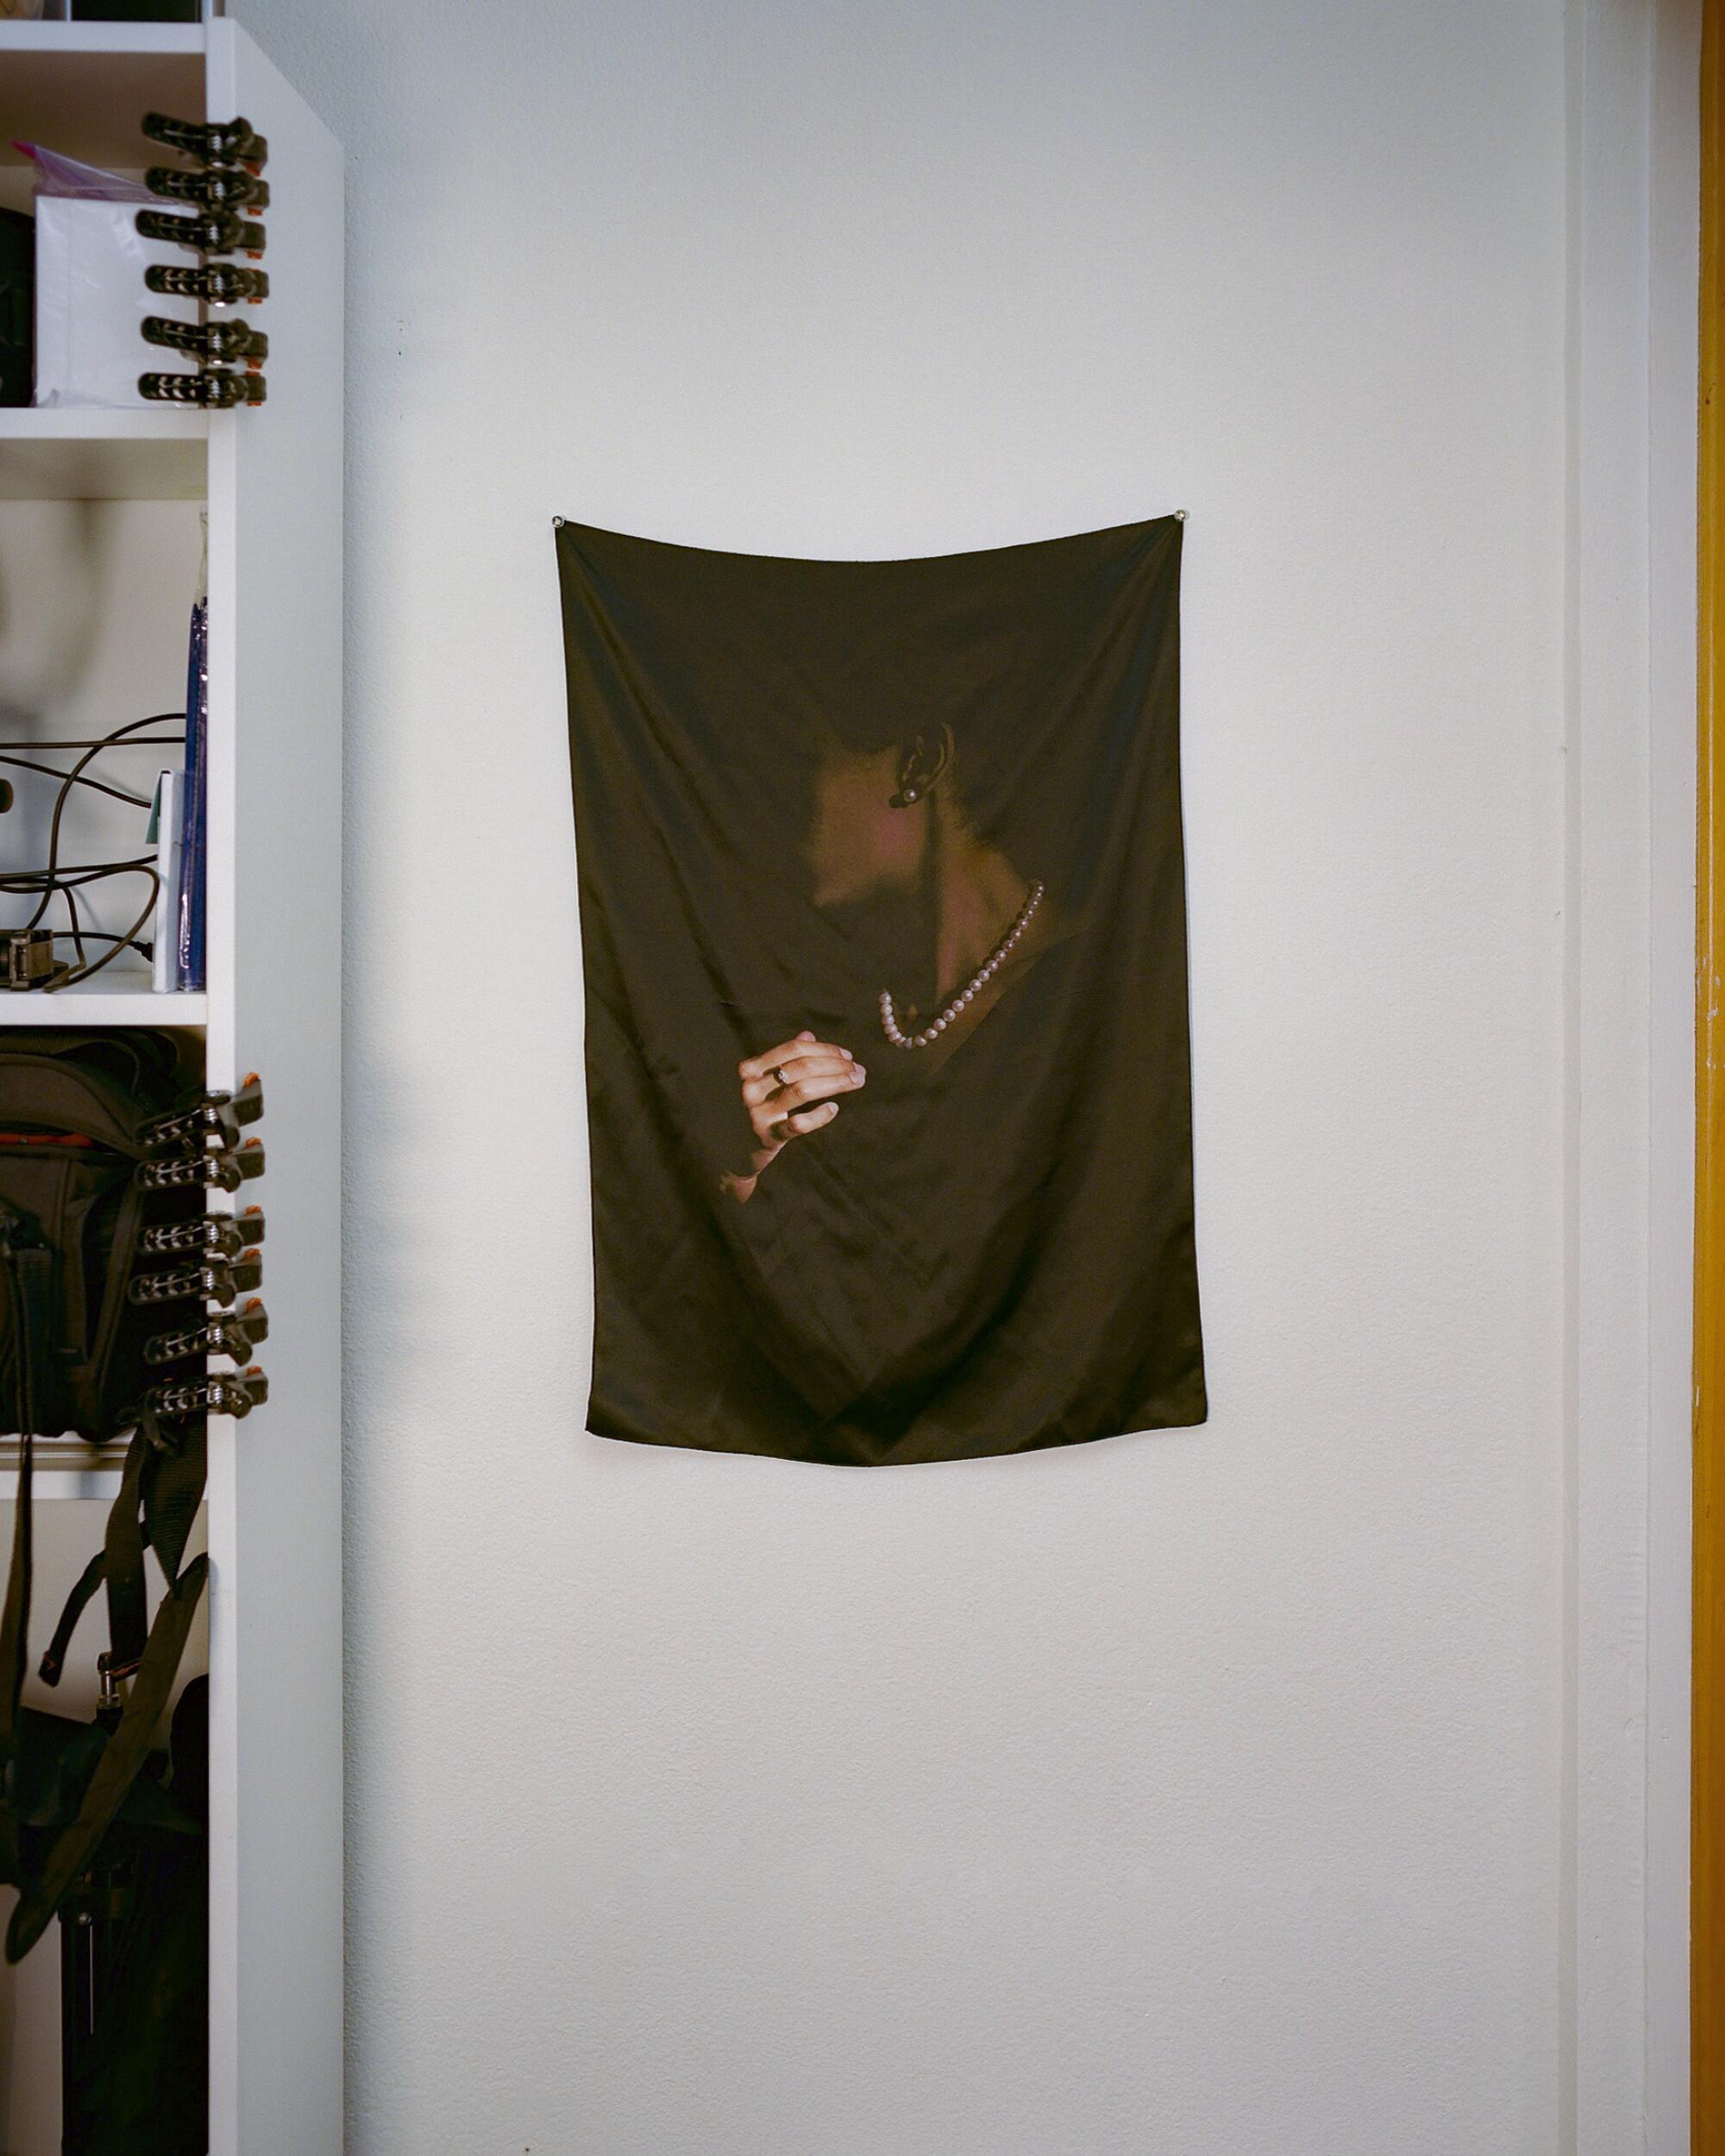 The photograph “Diamonds and Pearls” (2012) in Janna Ireland’s studio.